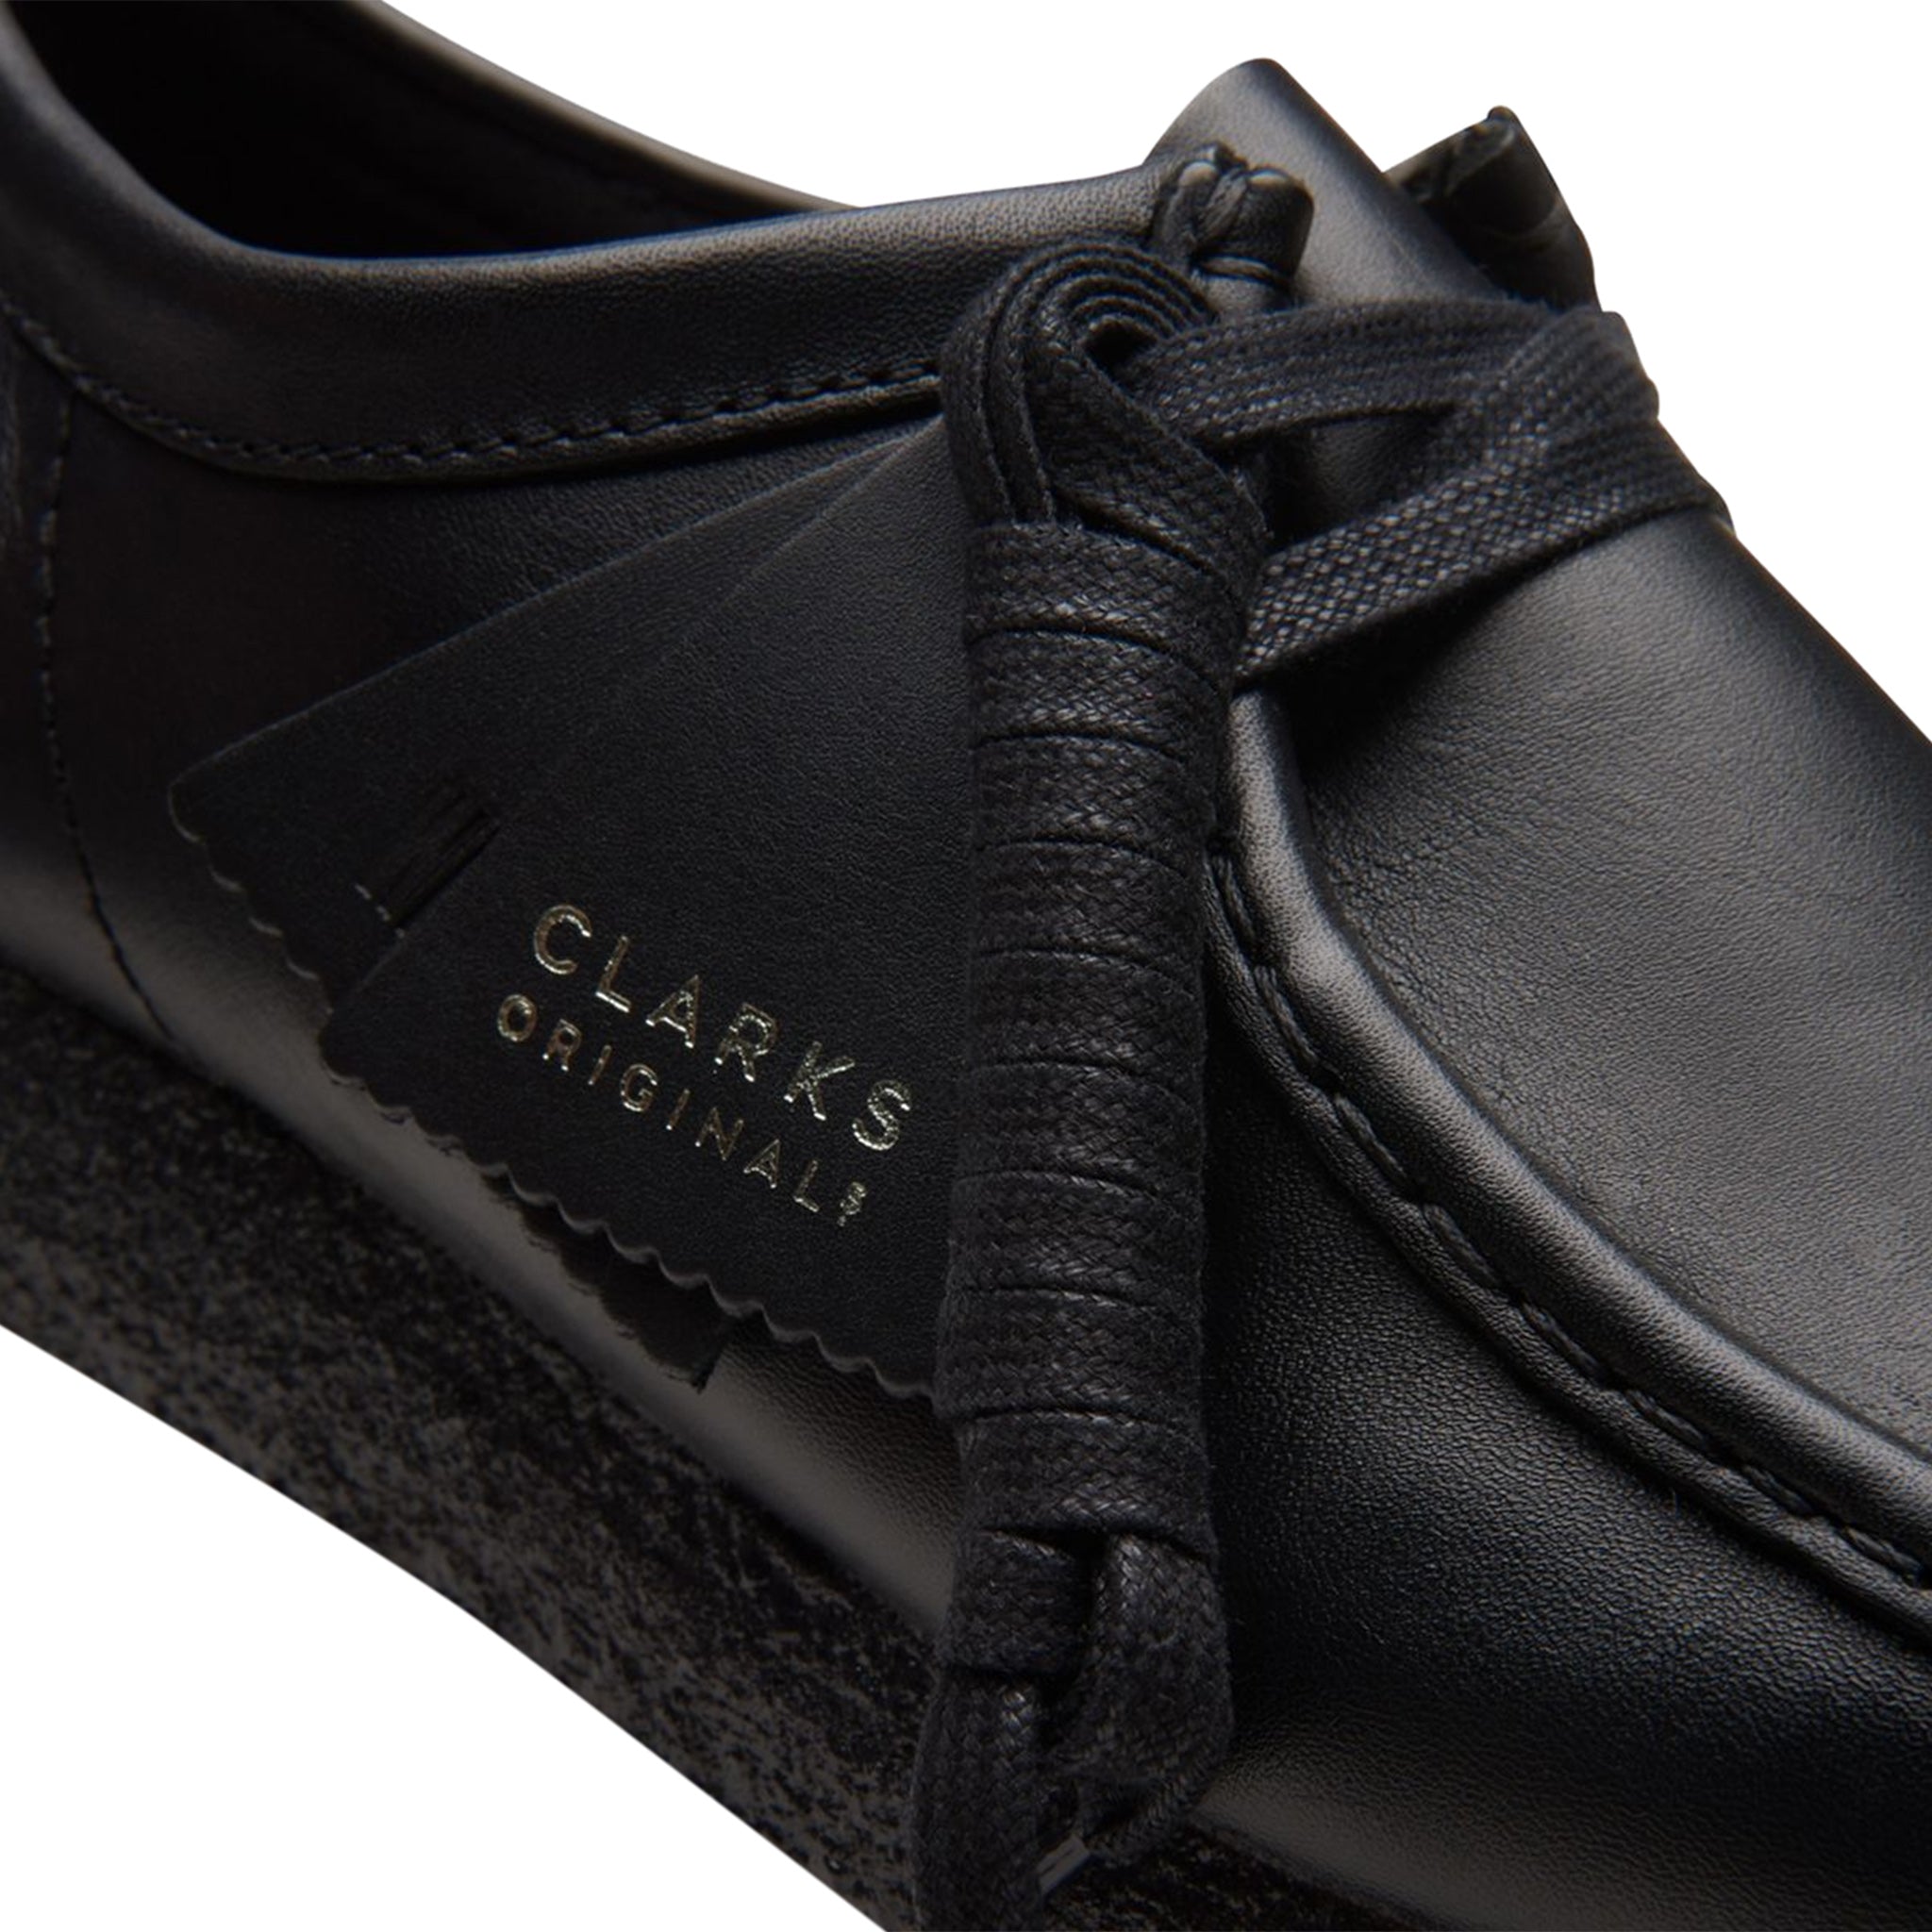 Clarks Originals Wallabee Shoes - Men's | Altitude Sports